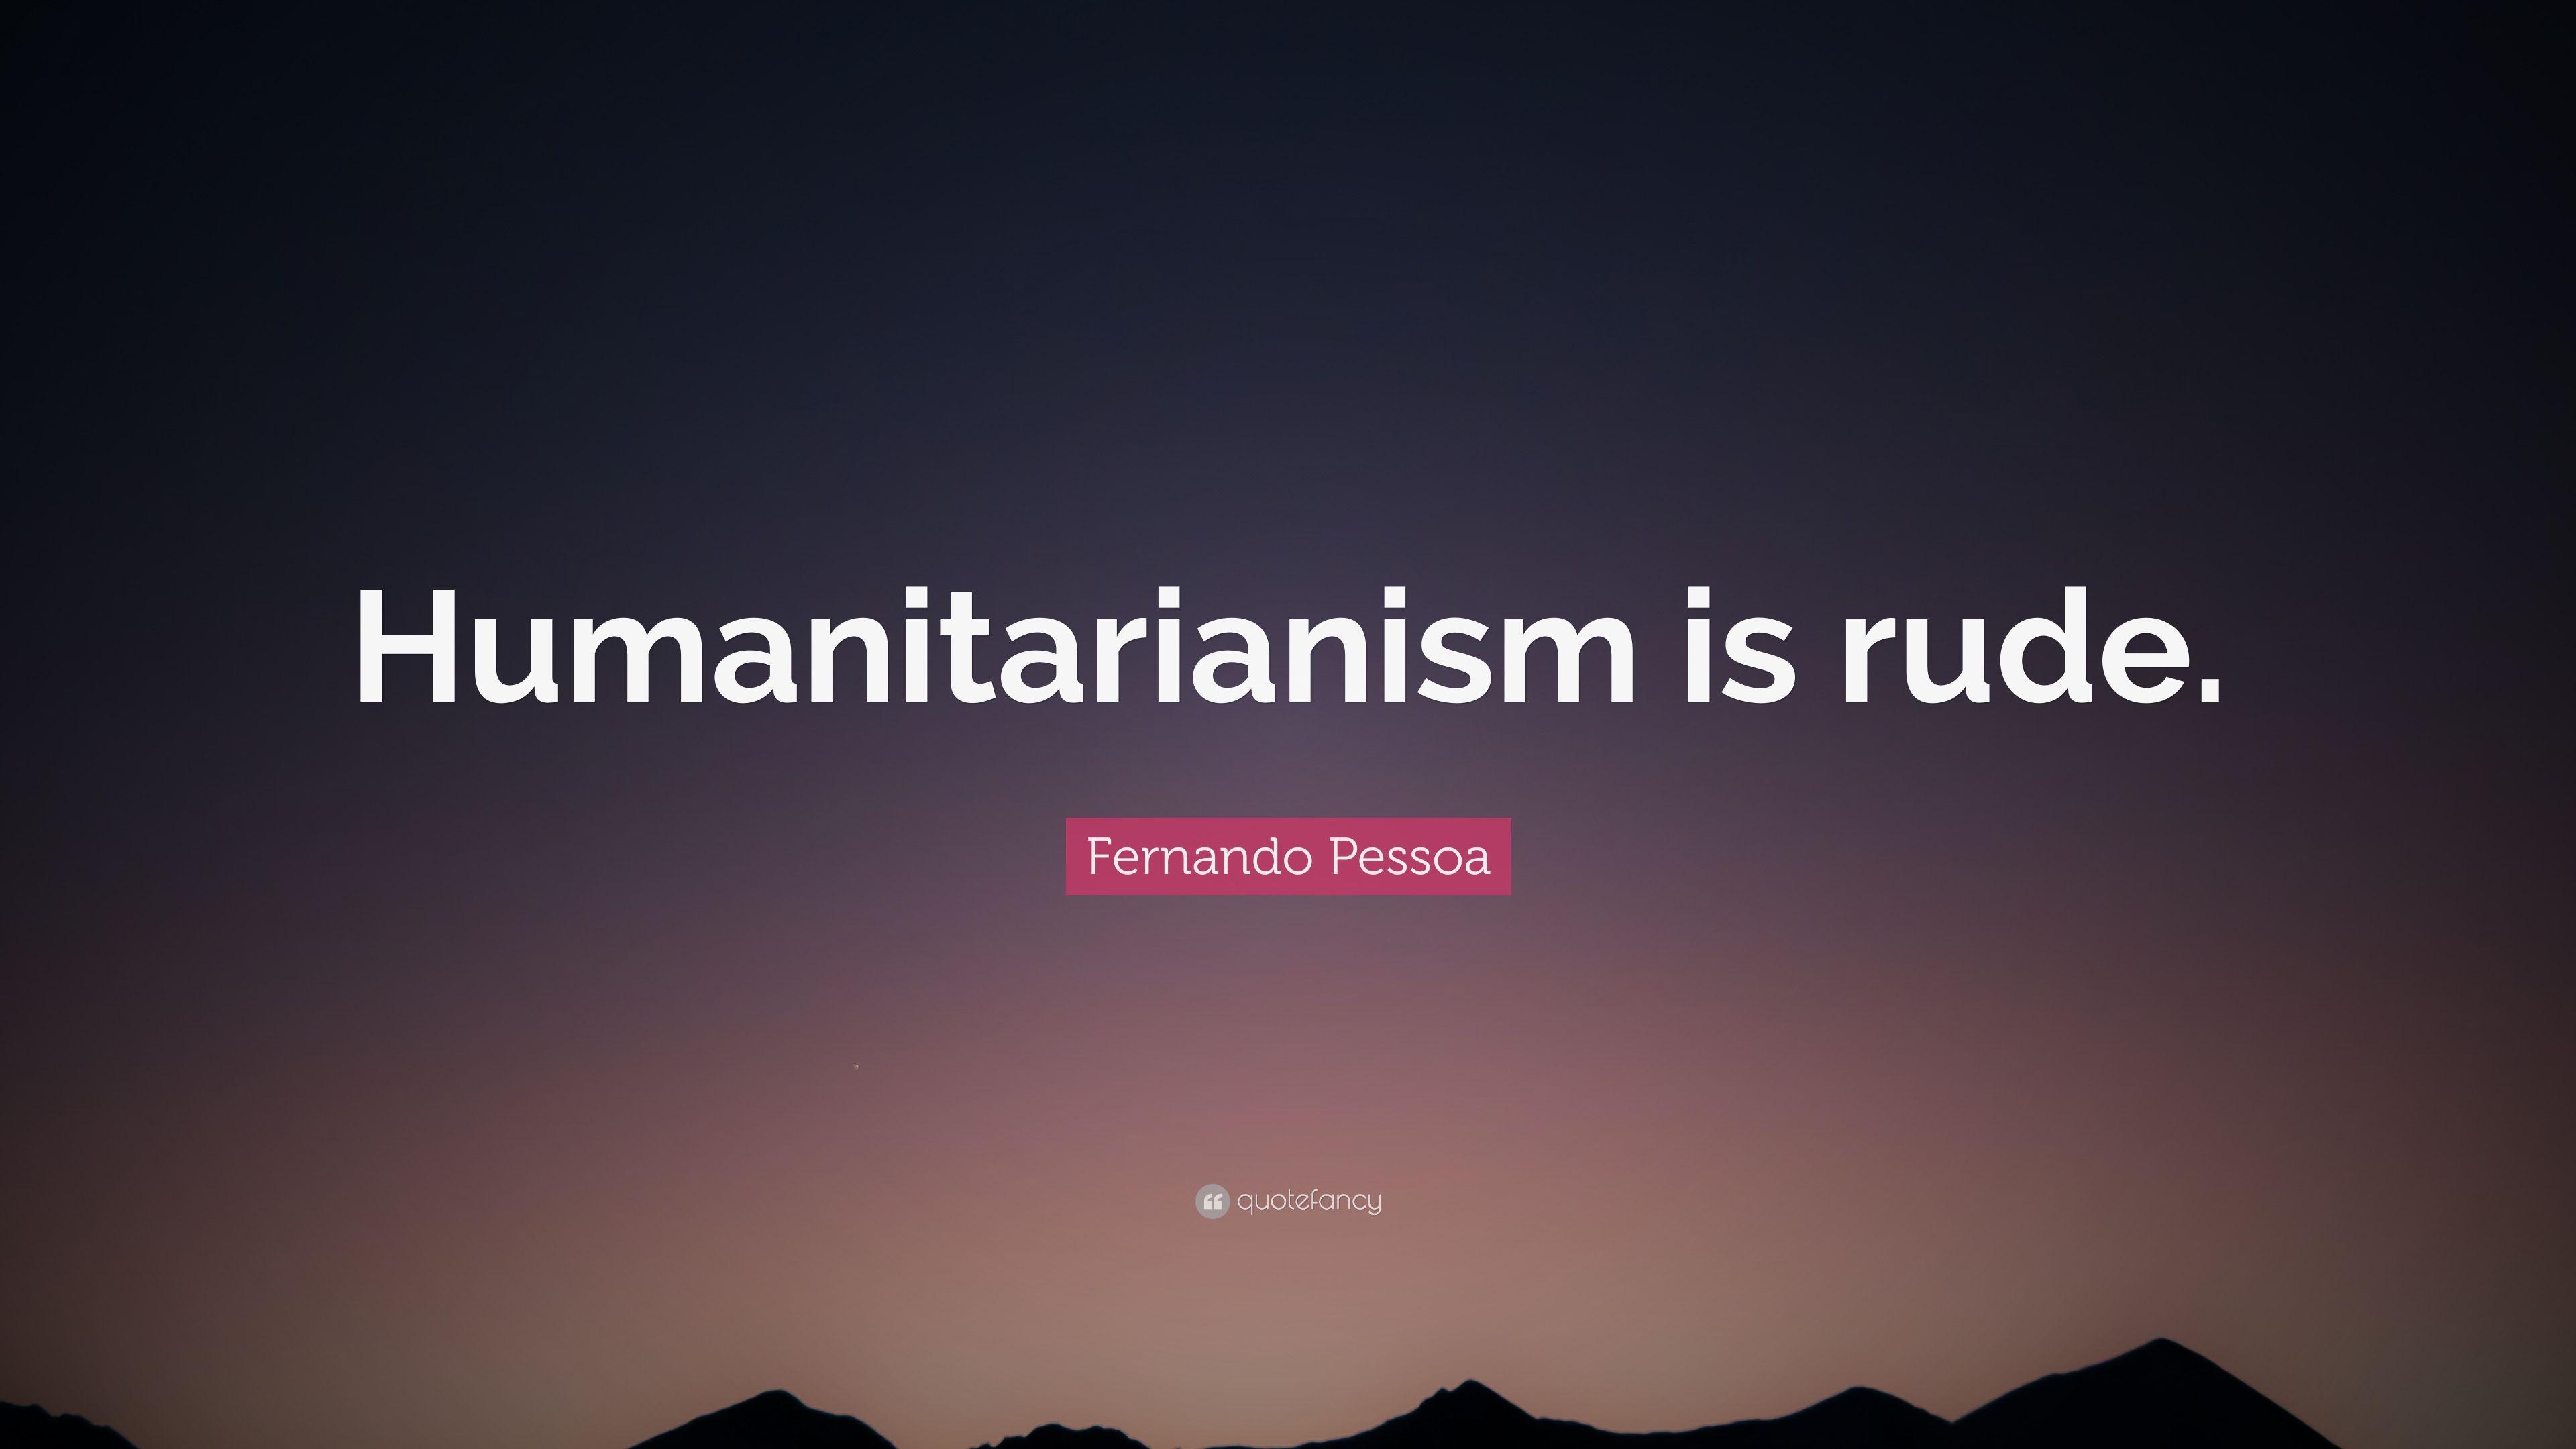 Fernando Pessoa Quote: “Humanitarianism is rude.” 7